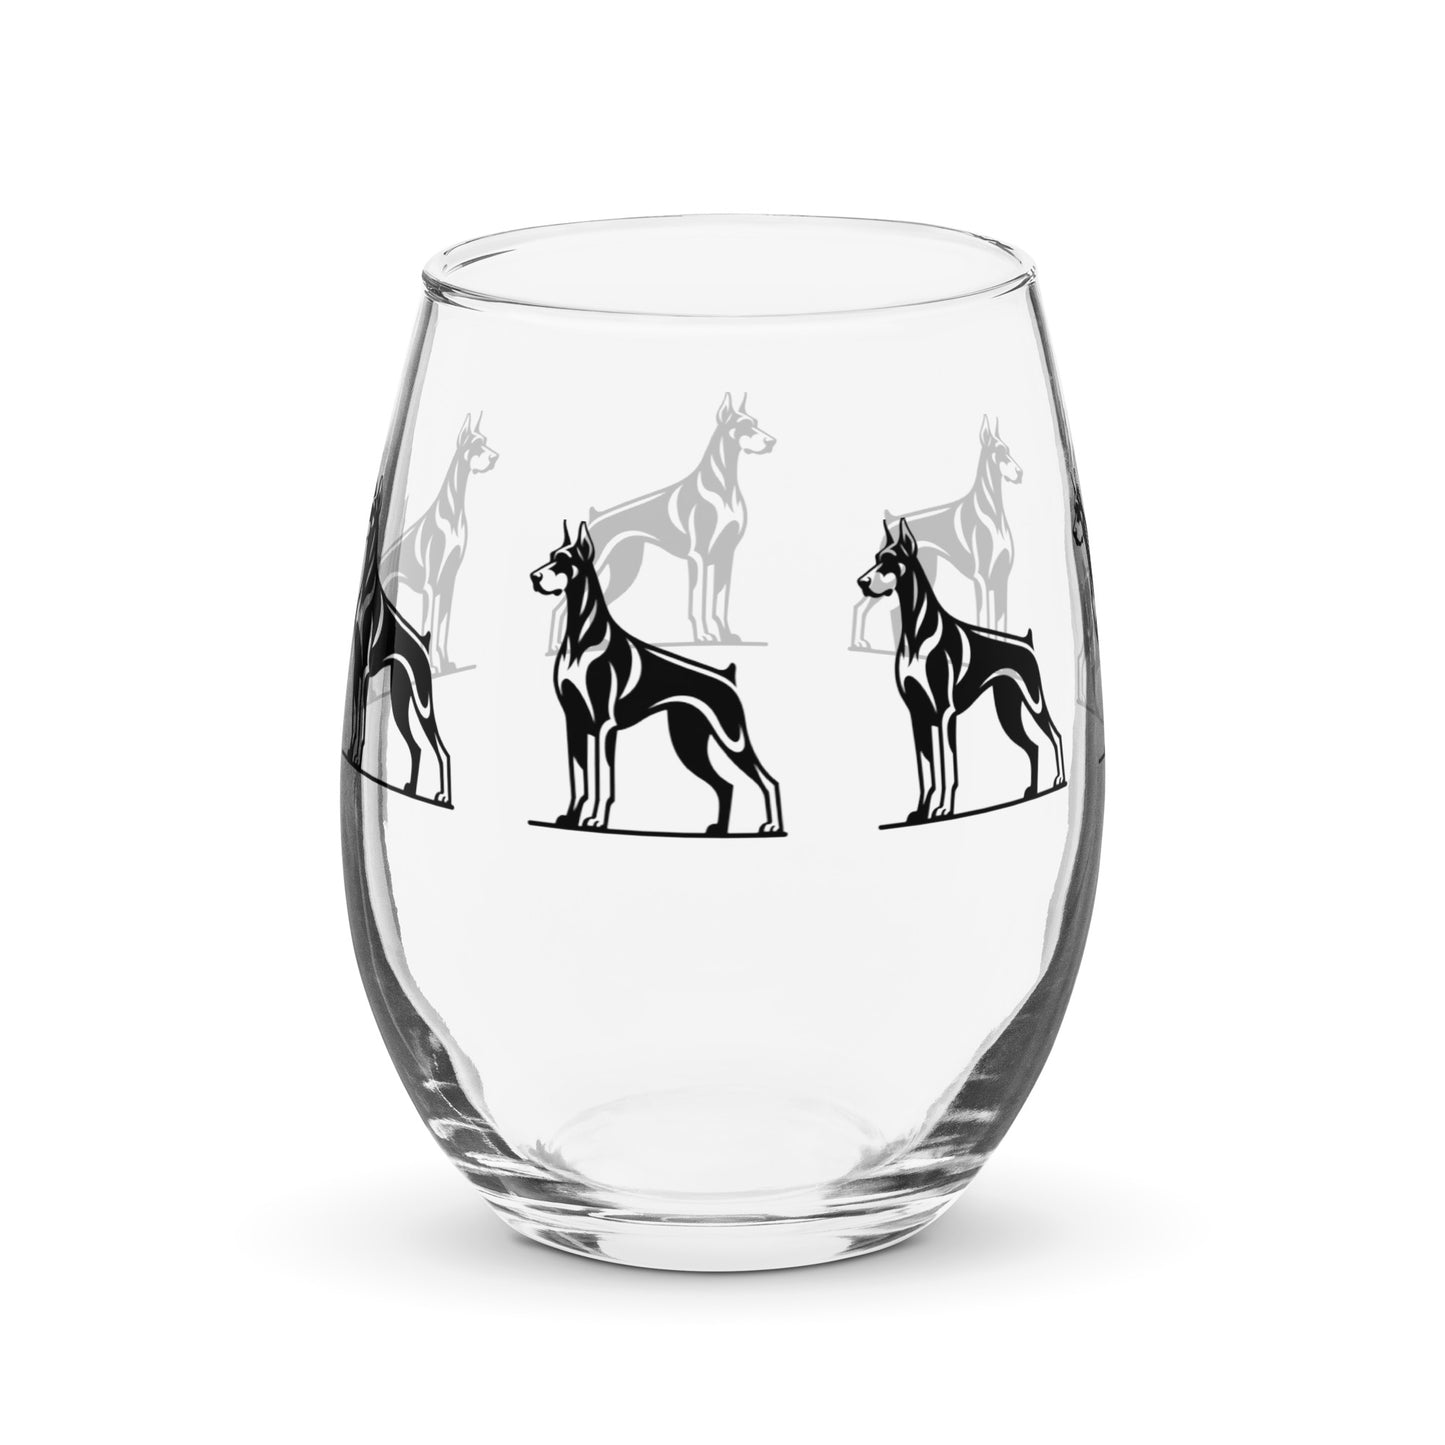 doberman doberman wine glass dog wine glass personalized wine glass wine glass